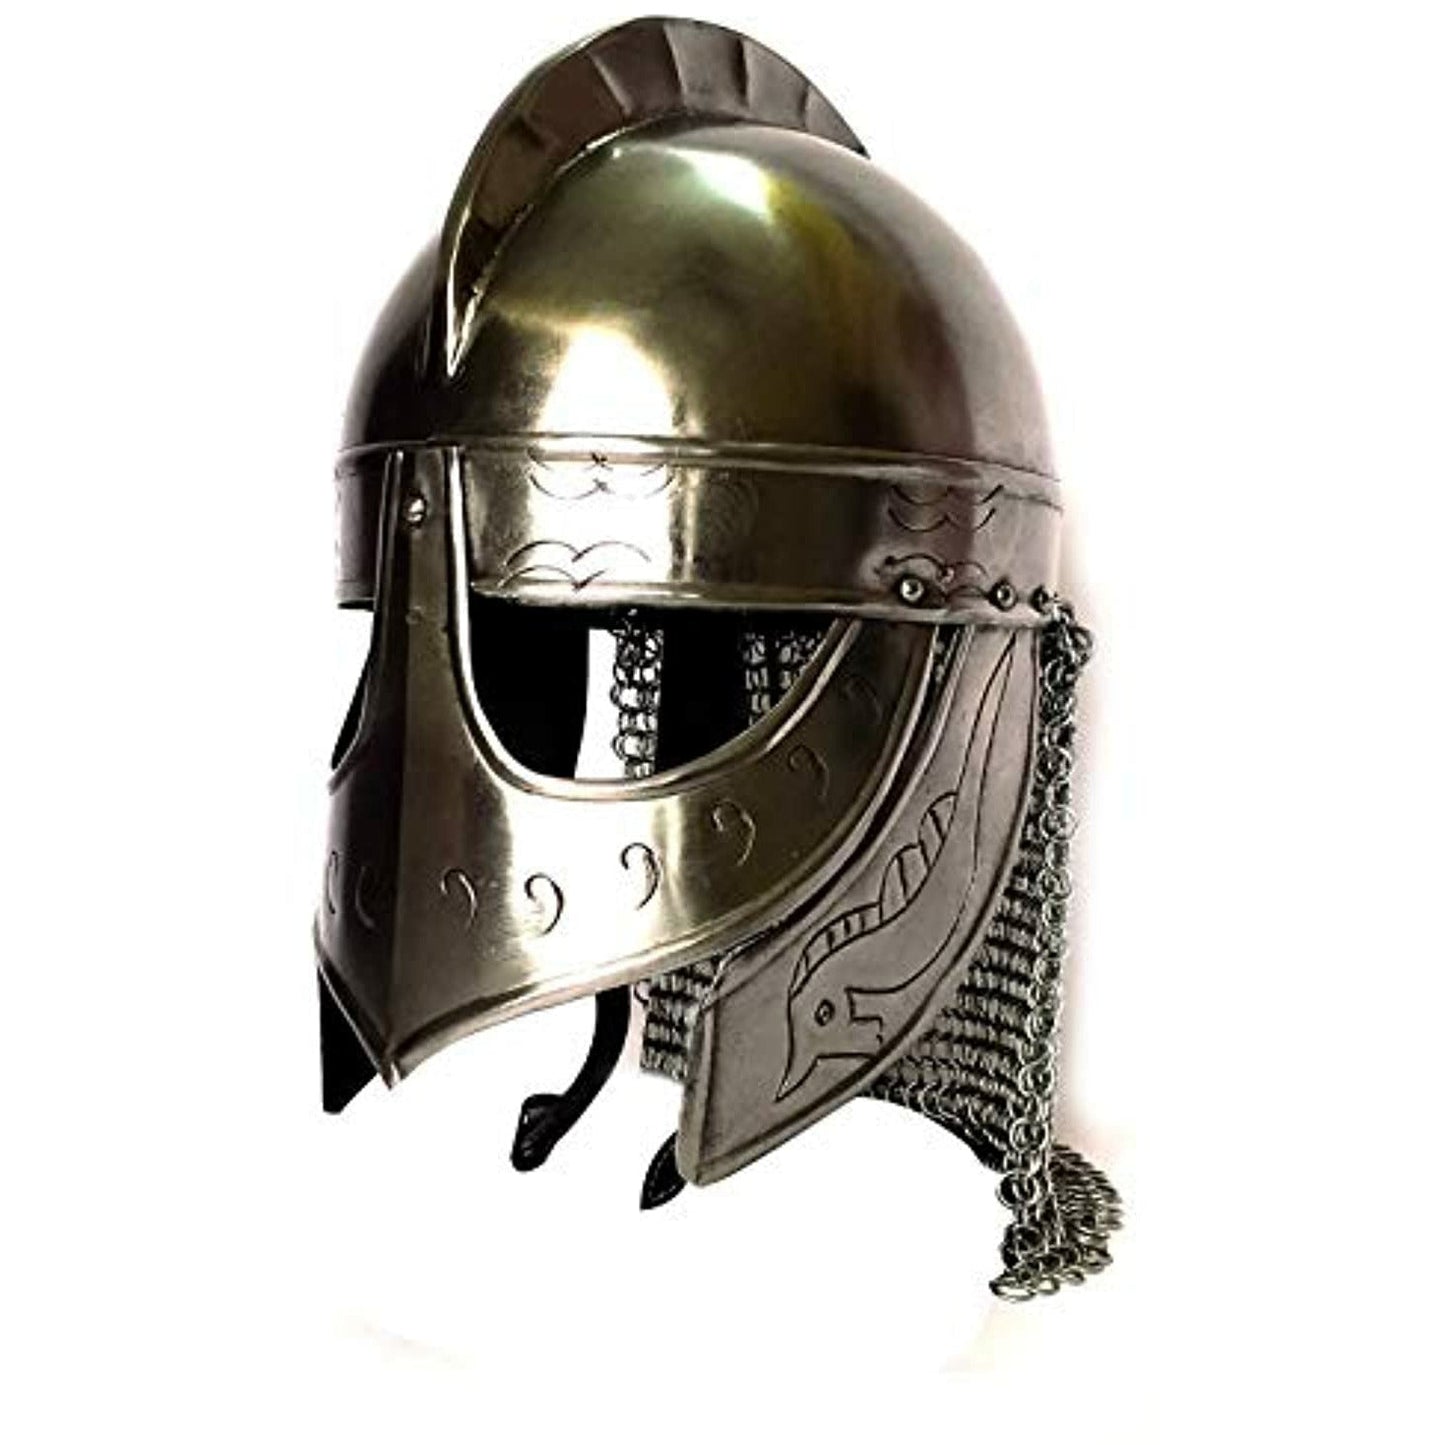 Steel Valsgarde Helm - Viking Helmet Armor